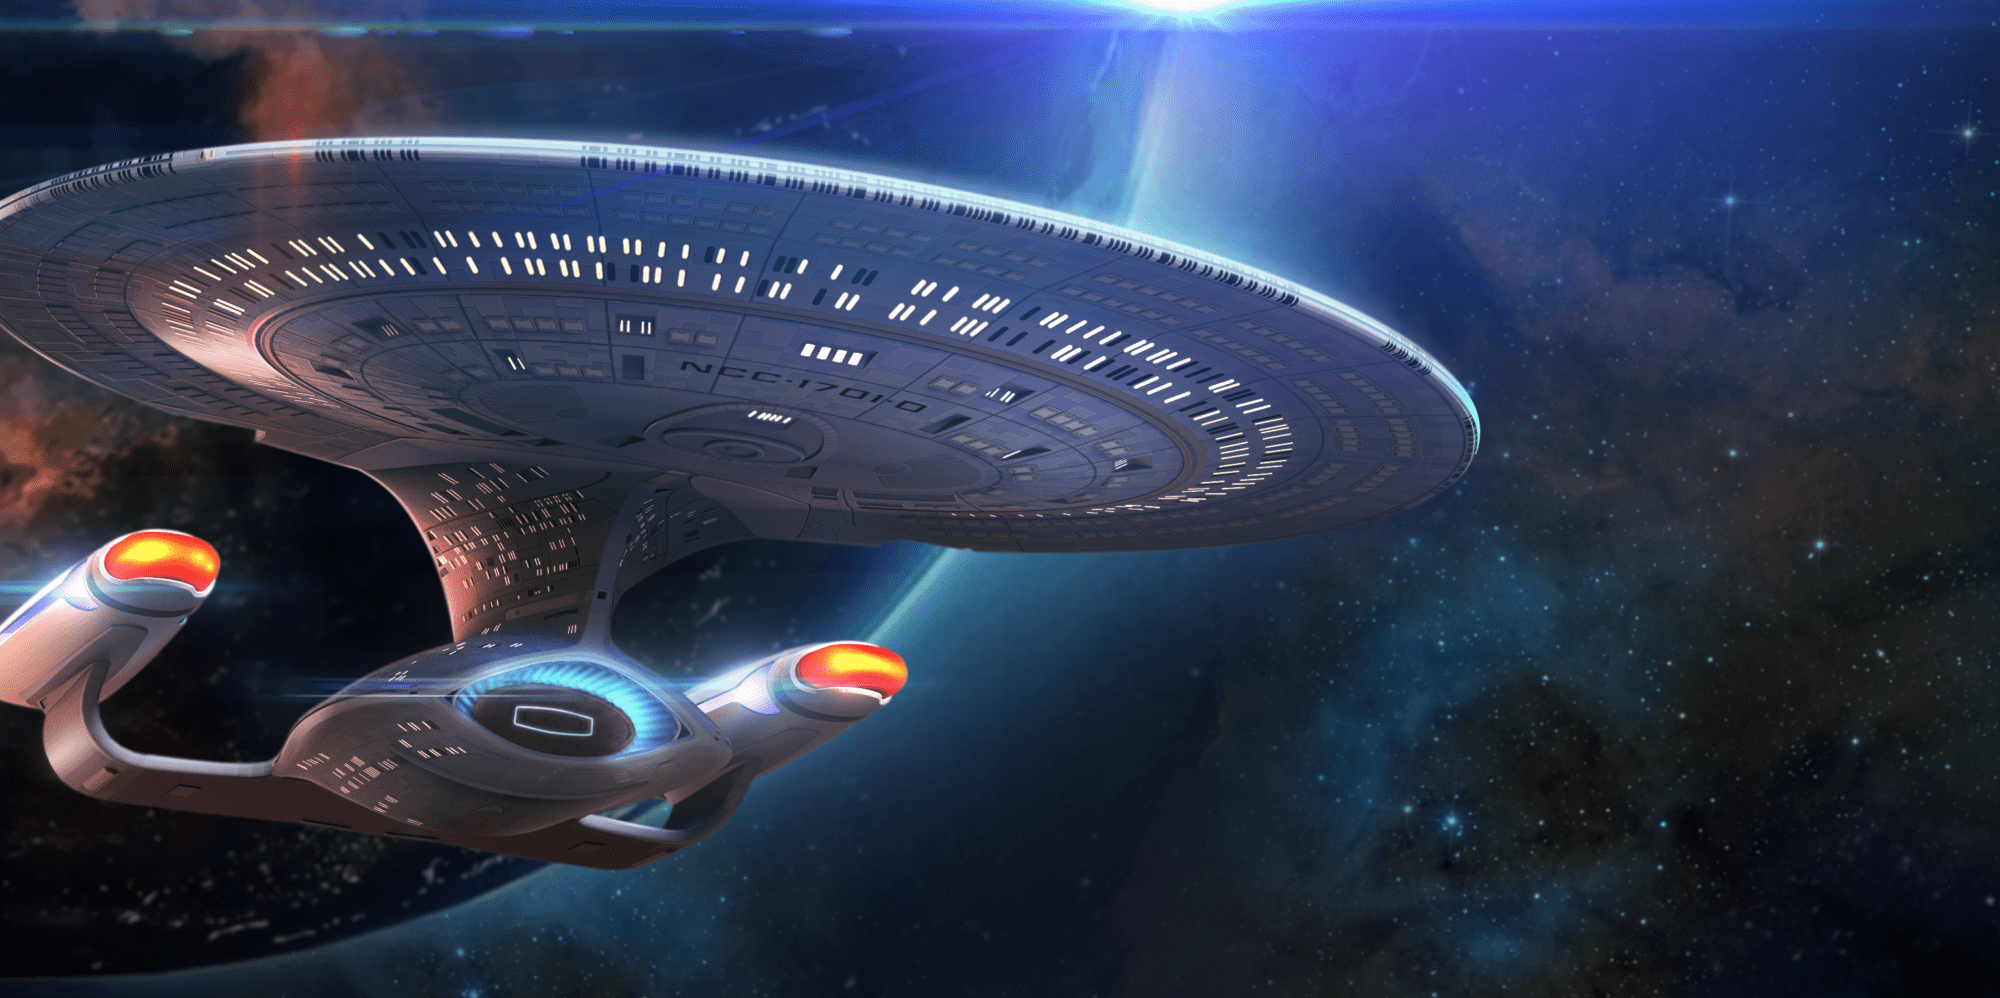 The Next Generation (TNG) Star Fleet Command